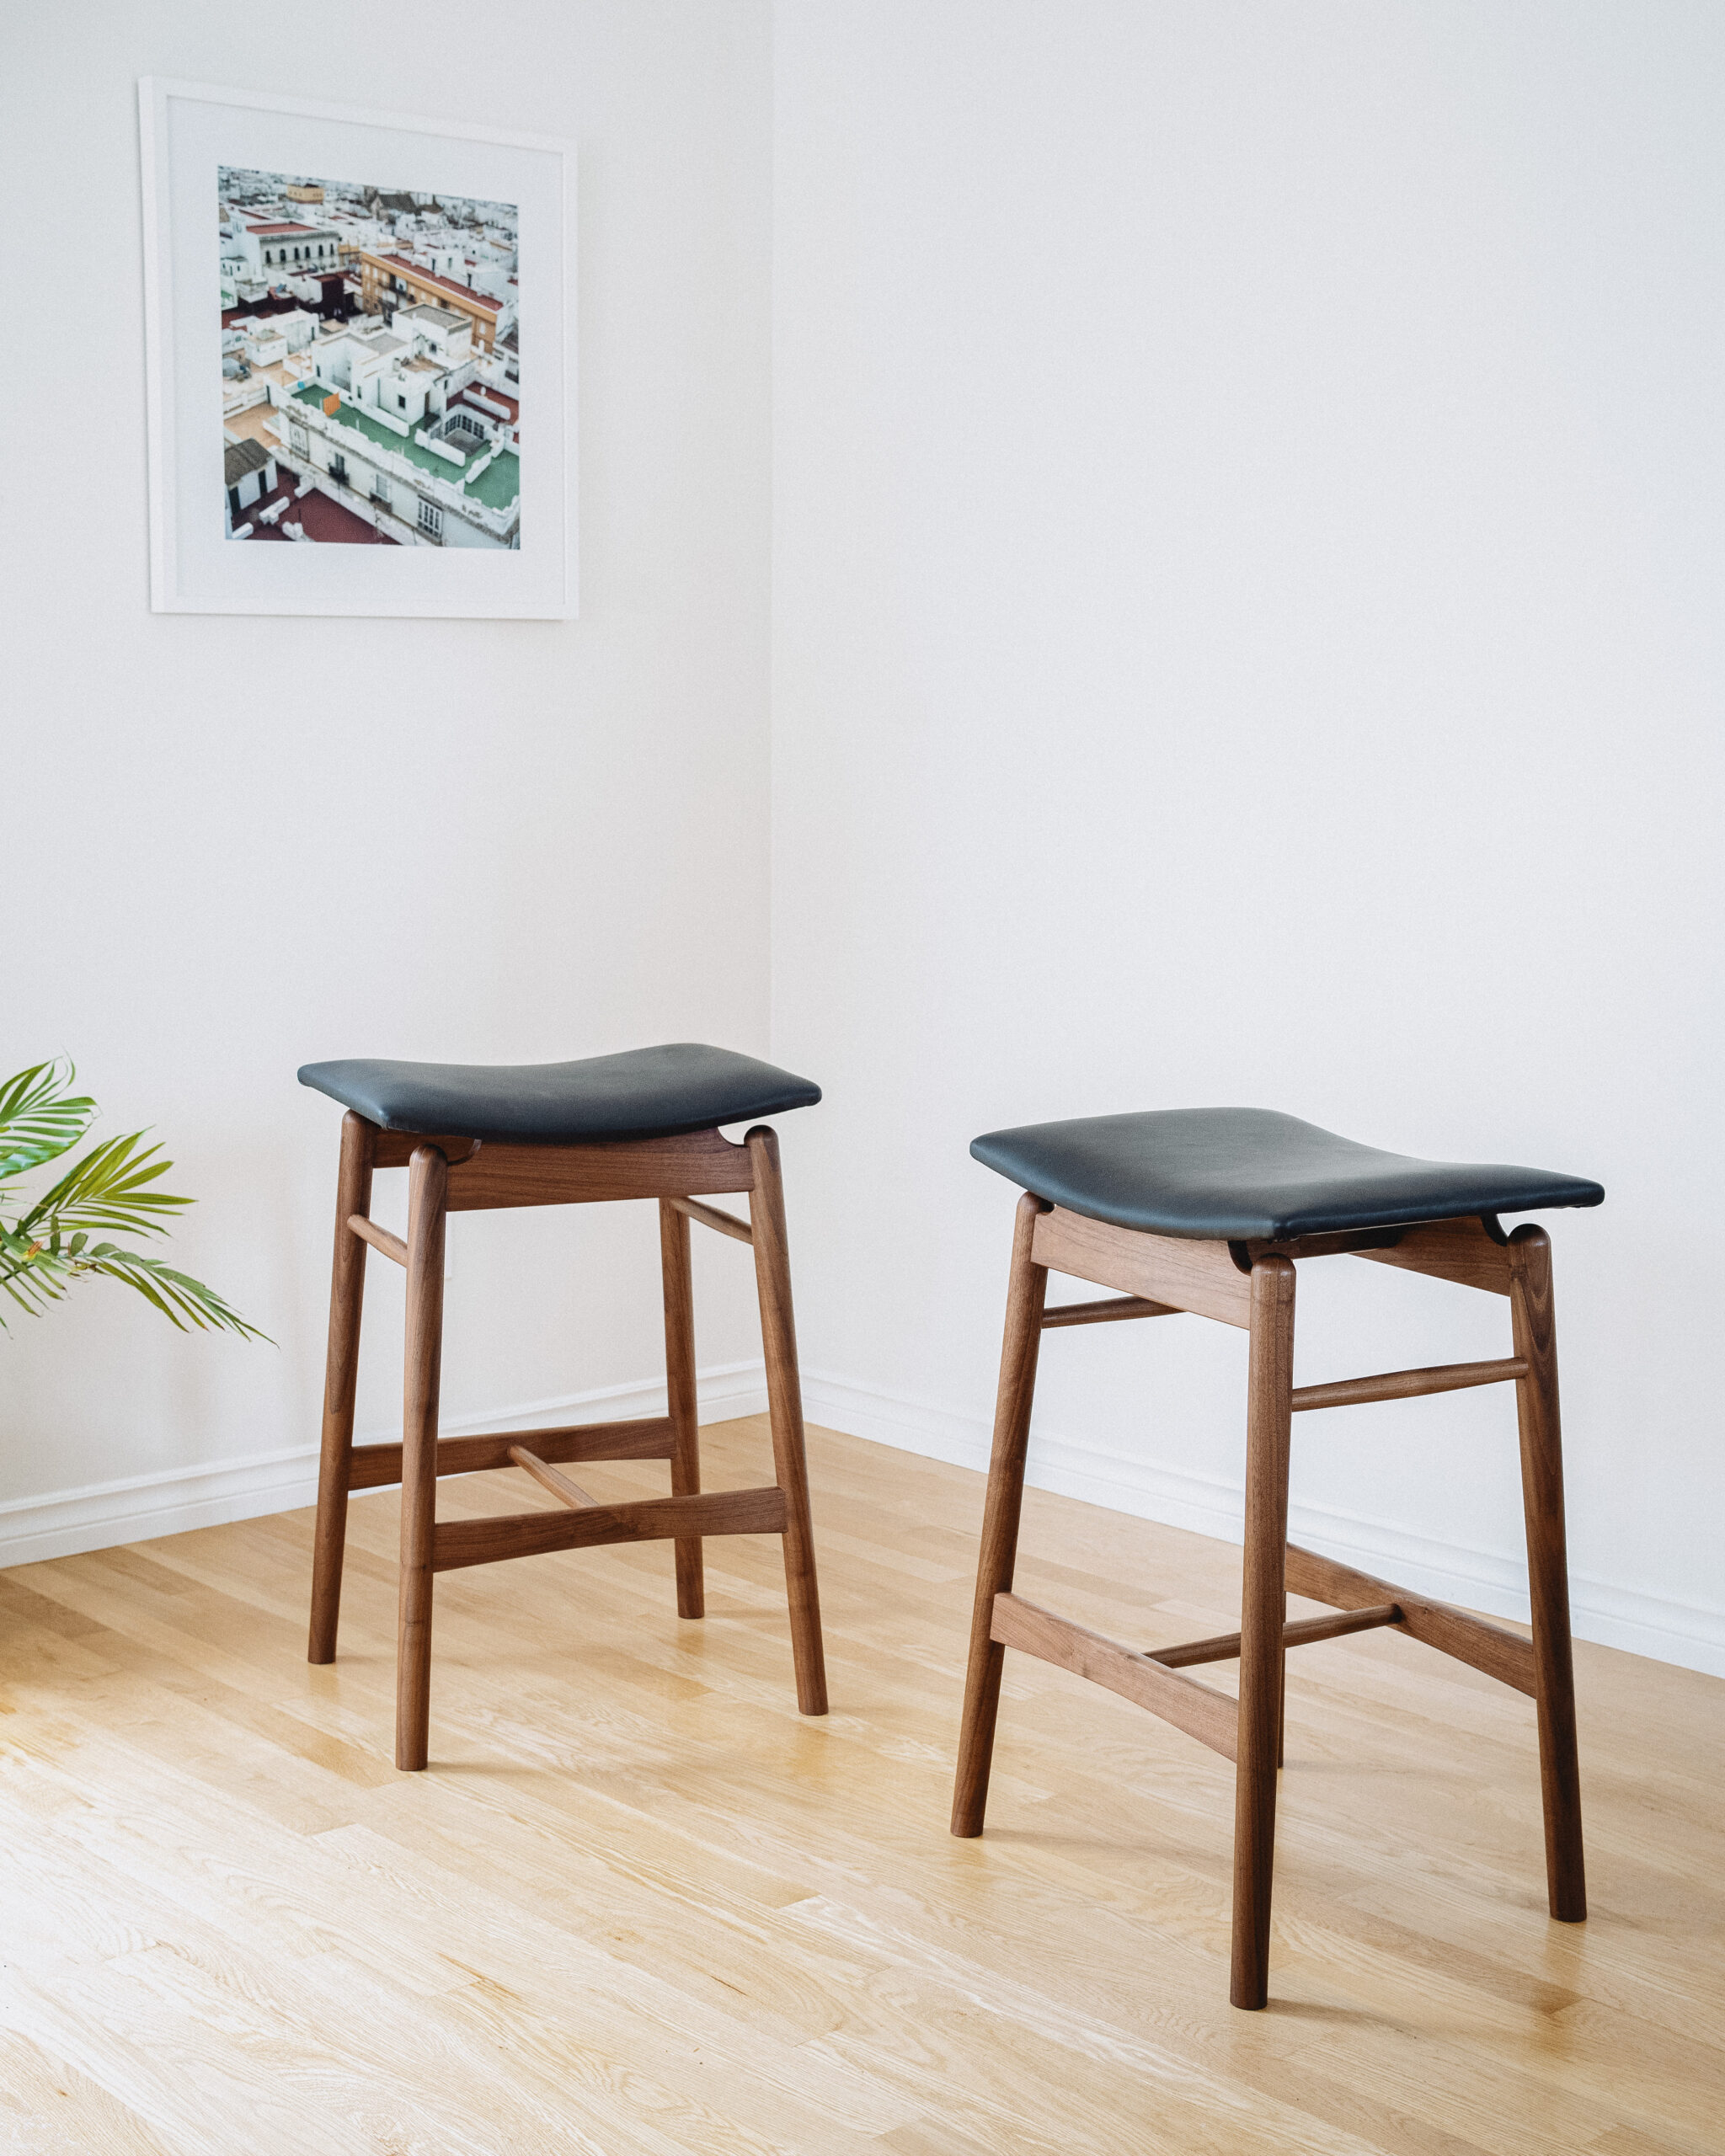 Heim combined stools